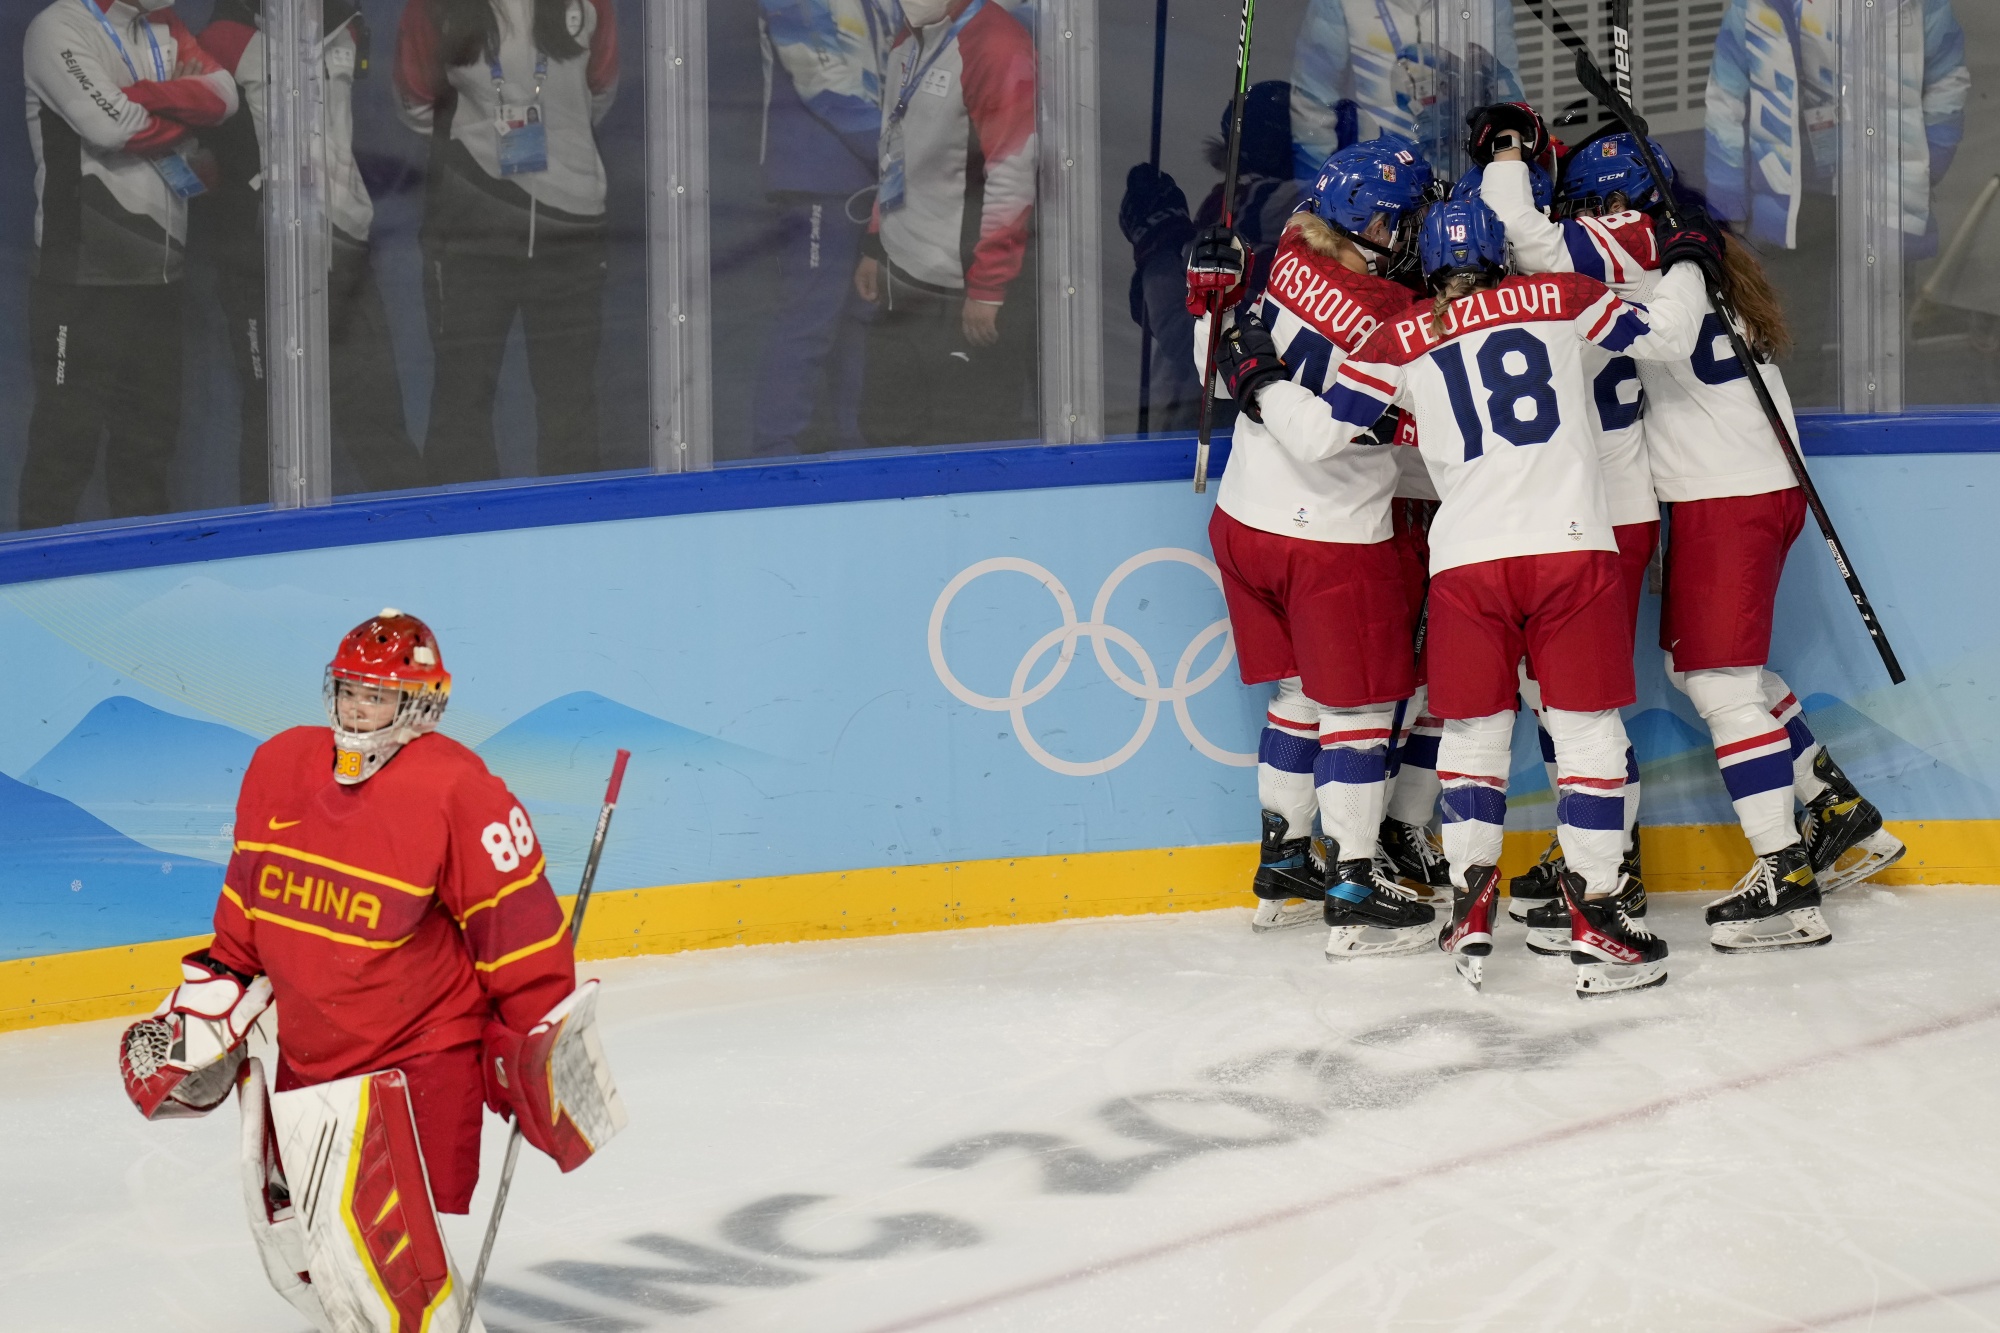 U.S. women's hockey beats Czech Republic in close game to advance